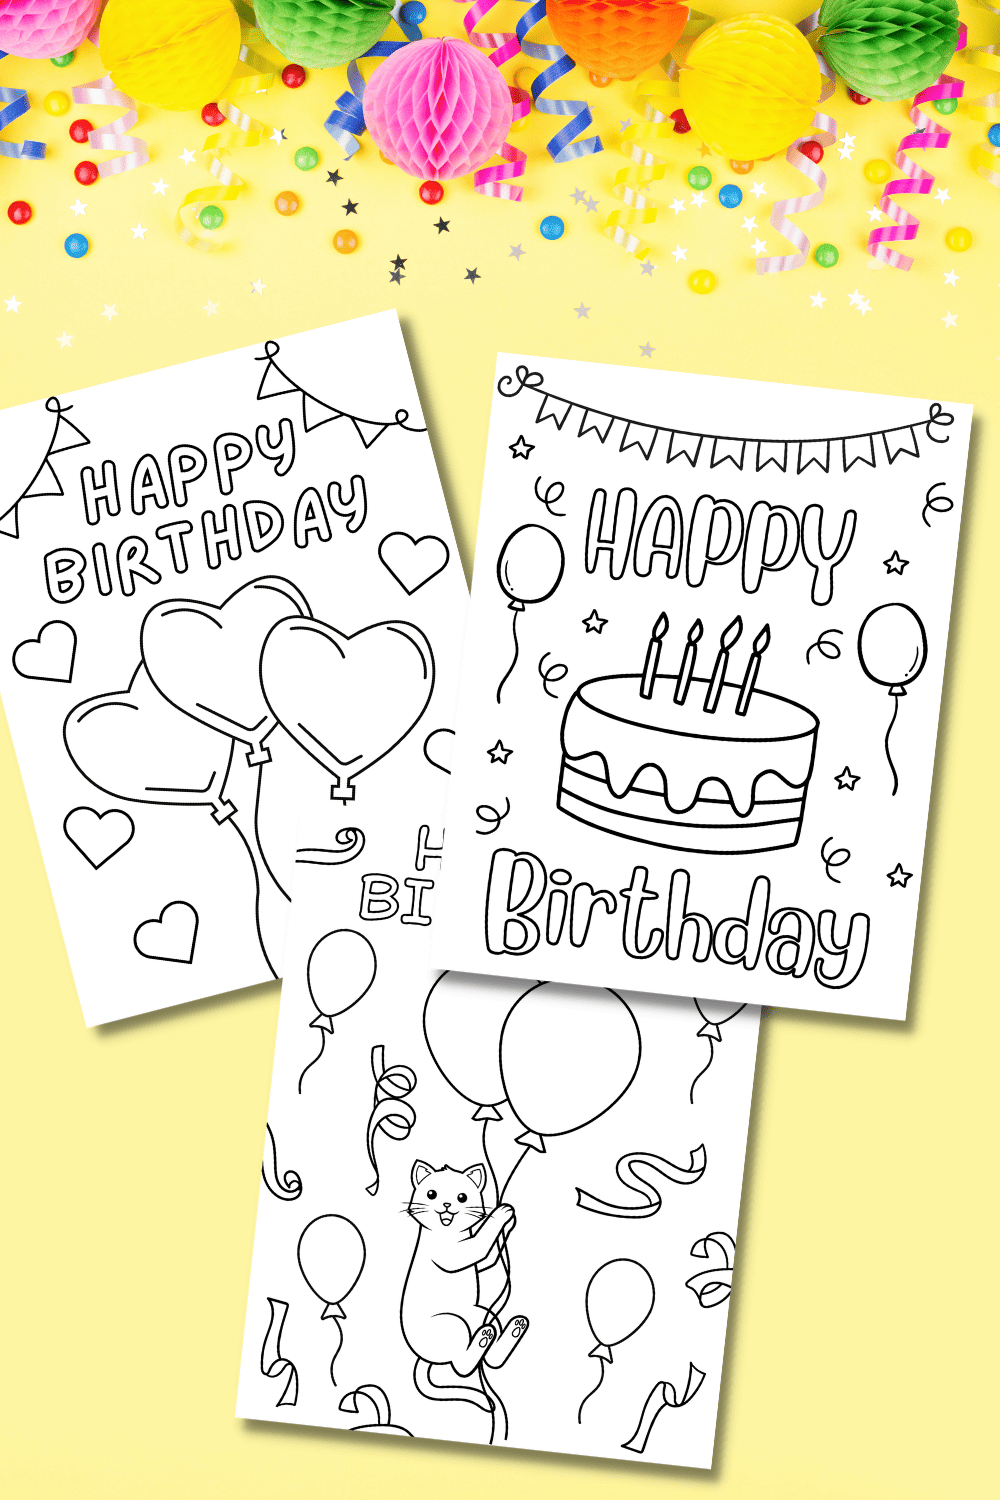 happy birthday dinosaur coloring page